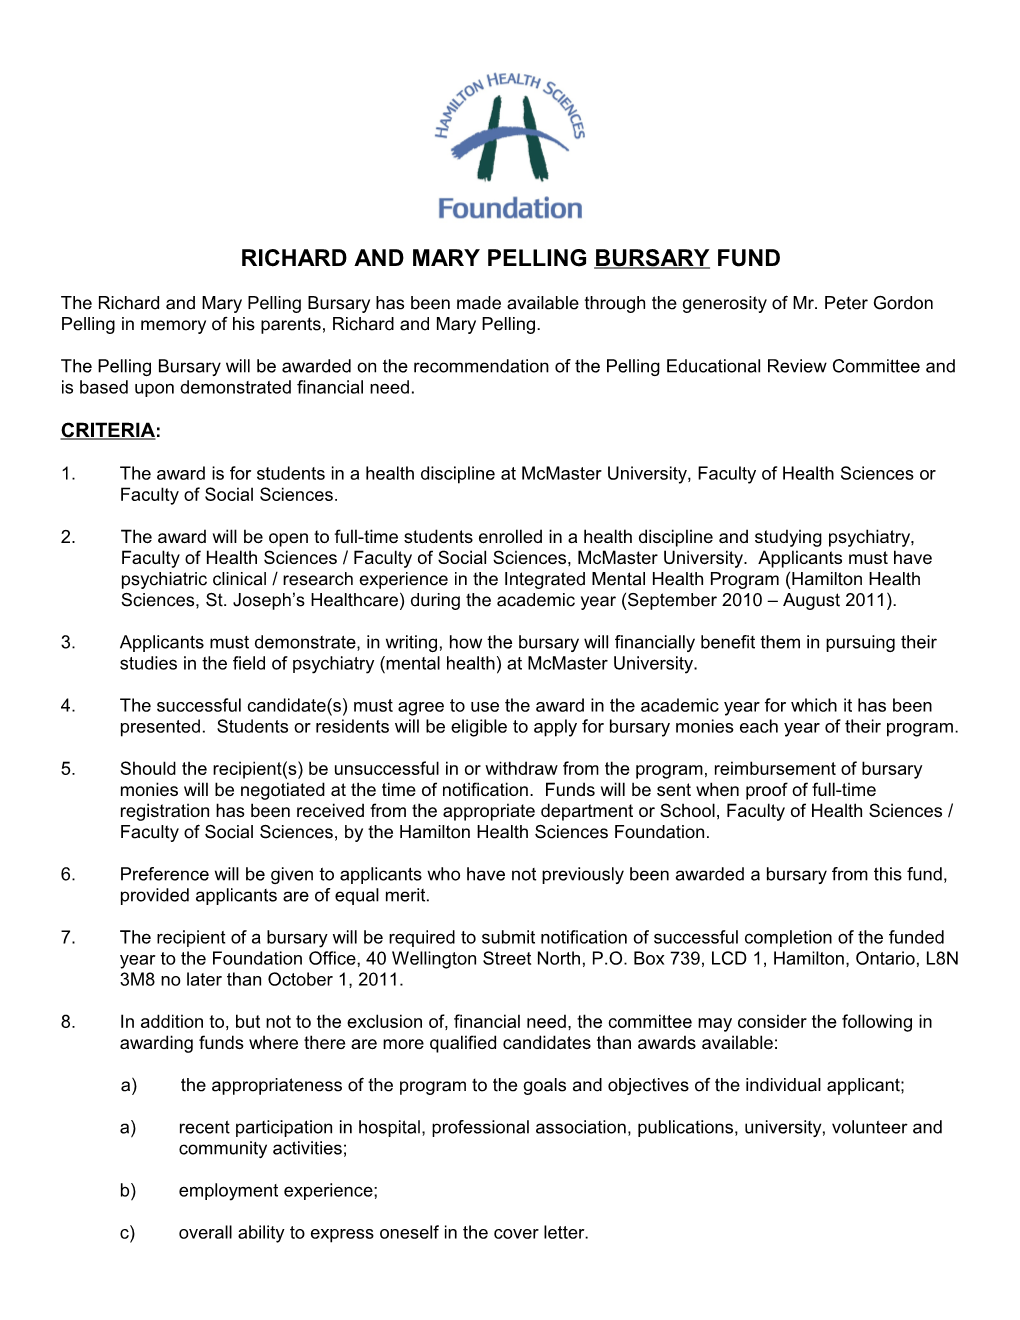 Richard and Mary Pelling Bursary Fund